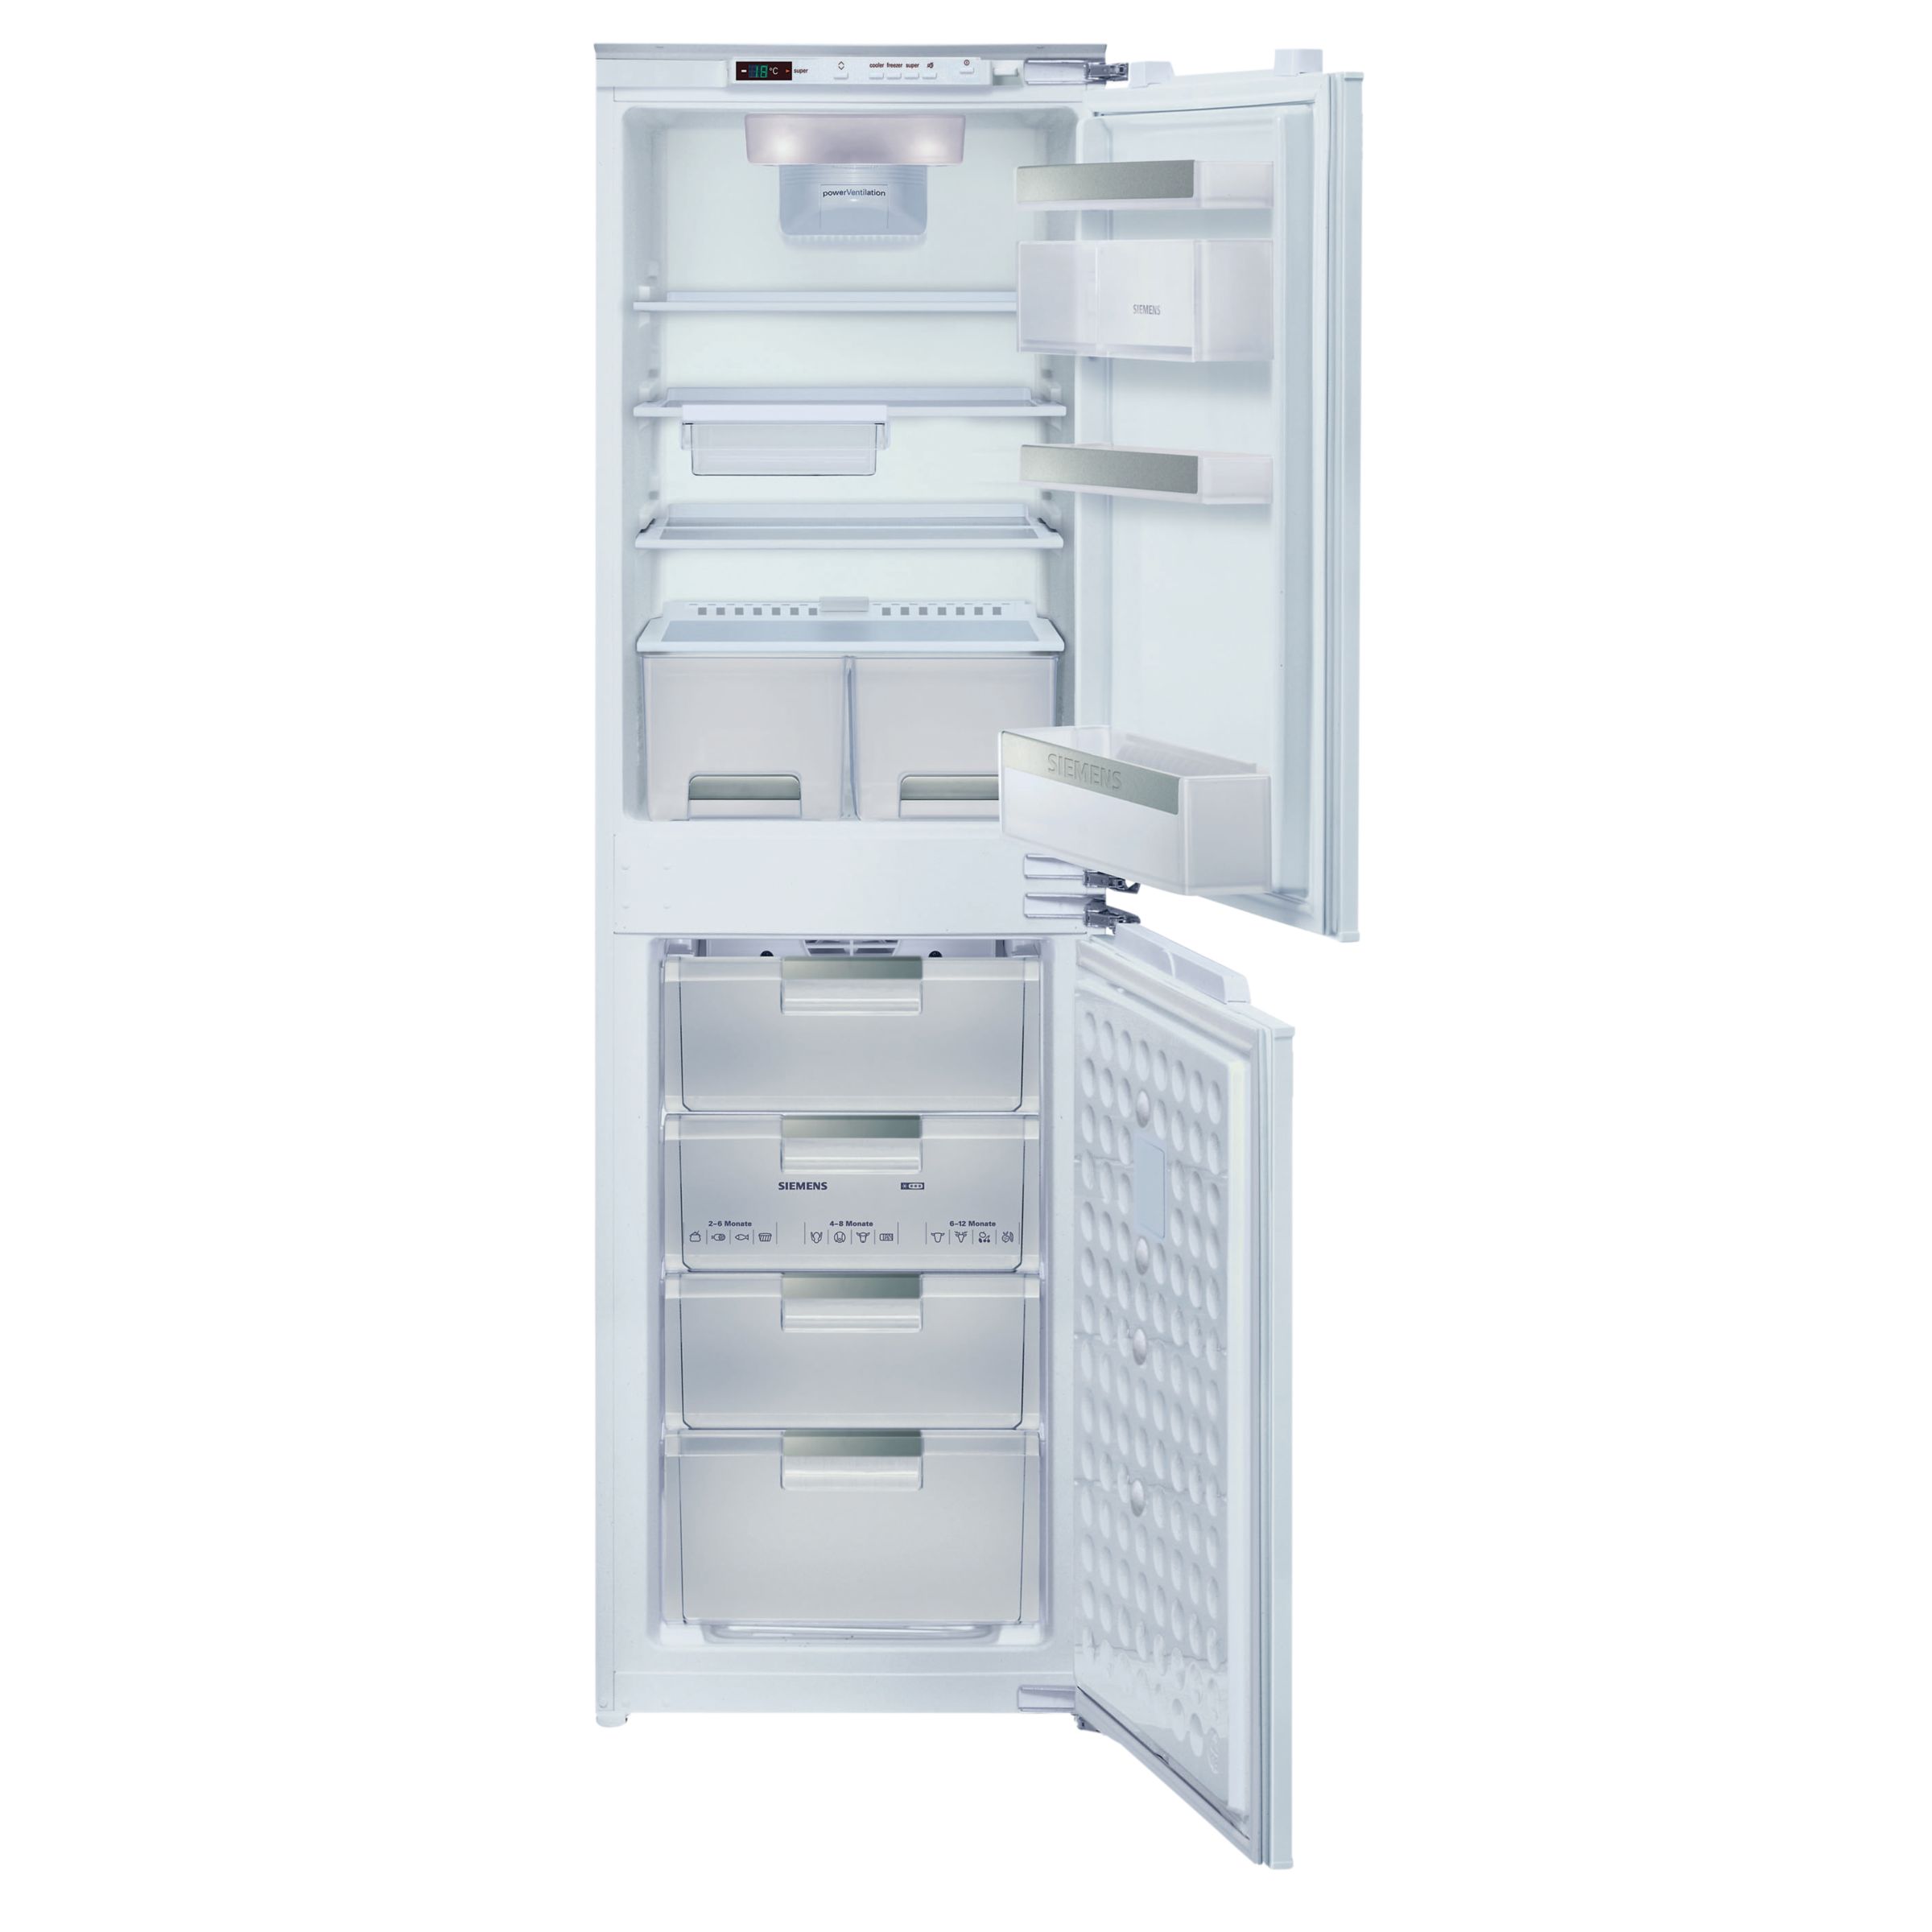 Siemens KI32NA50GB Integrated Fridge Freezer, White at John Lewis